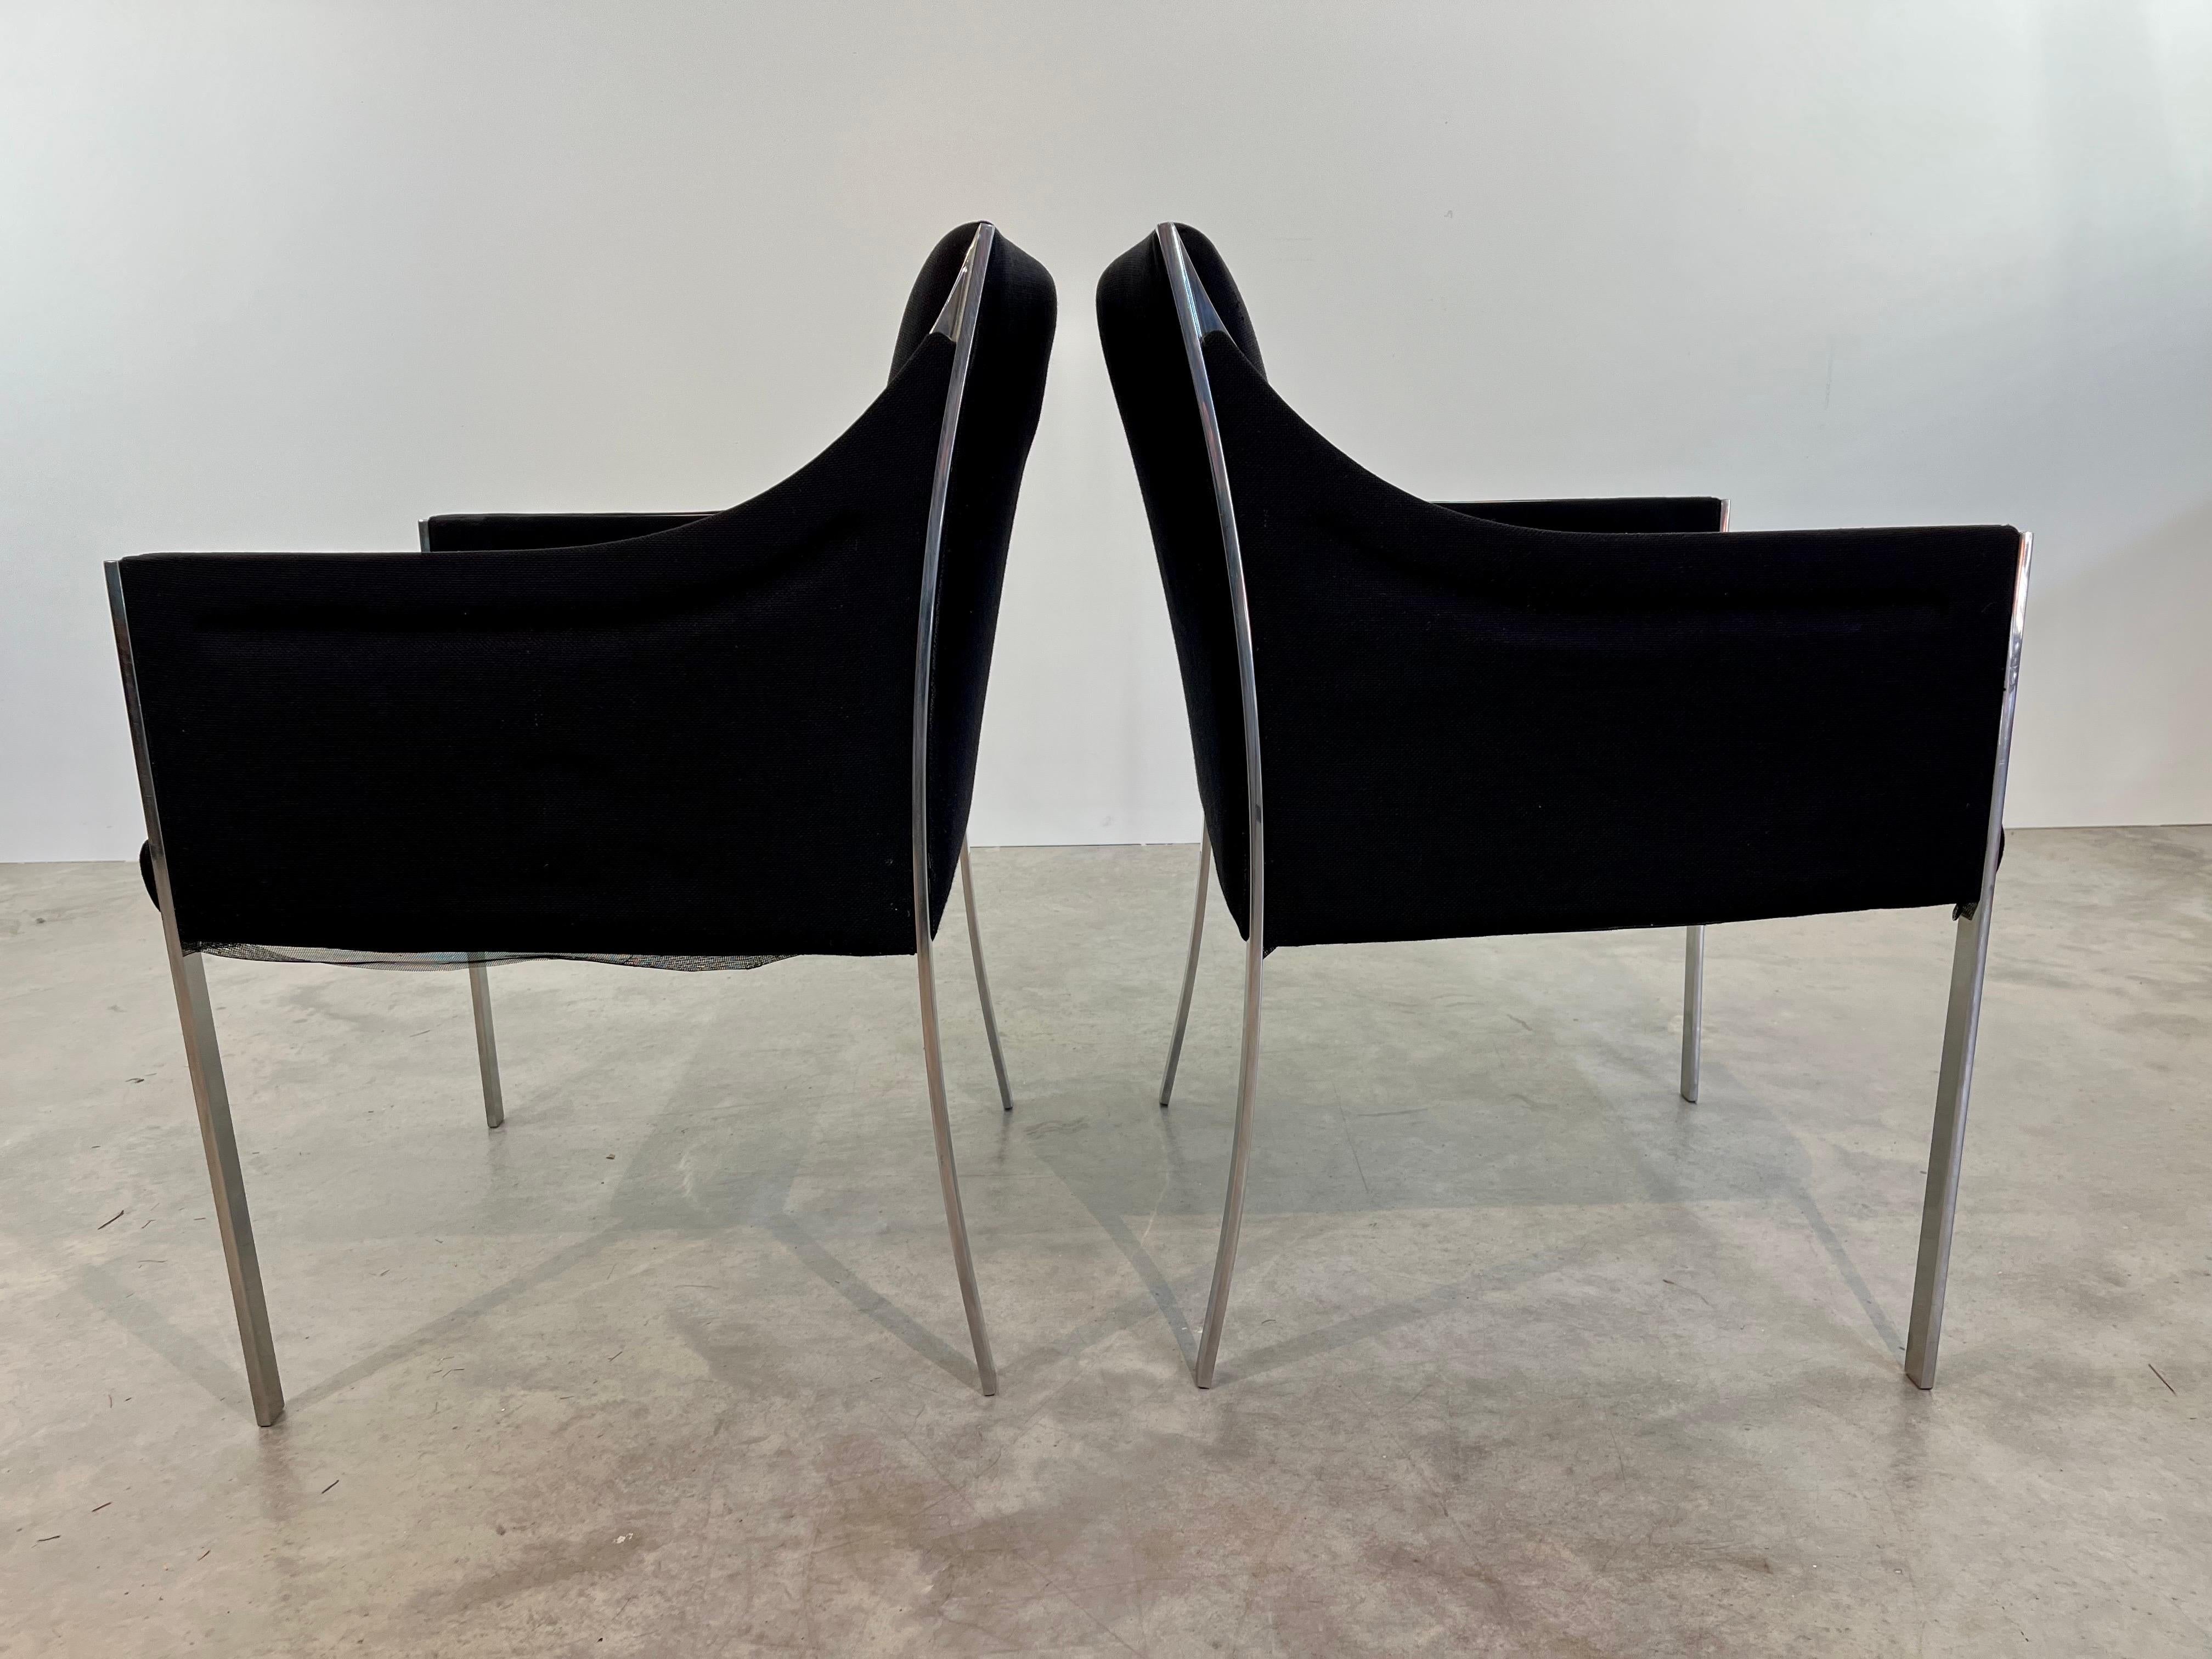 Seltenes Paar skulpturaler Jens Risom-Loungesessel aus verchromtem Stahl (amerikanisch) im Angebot